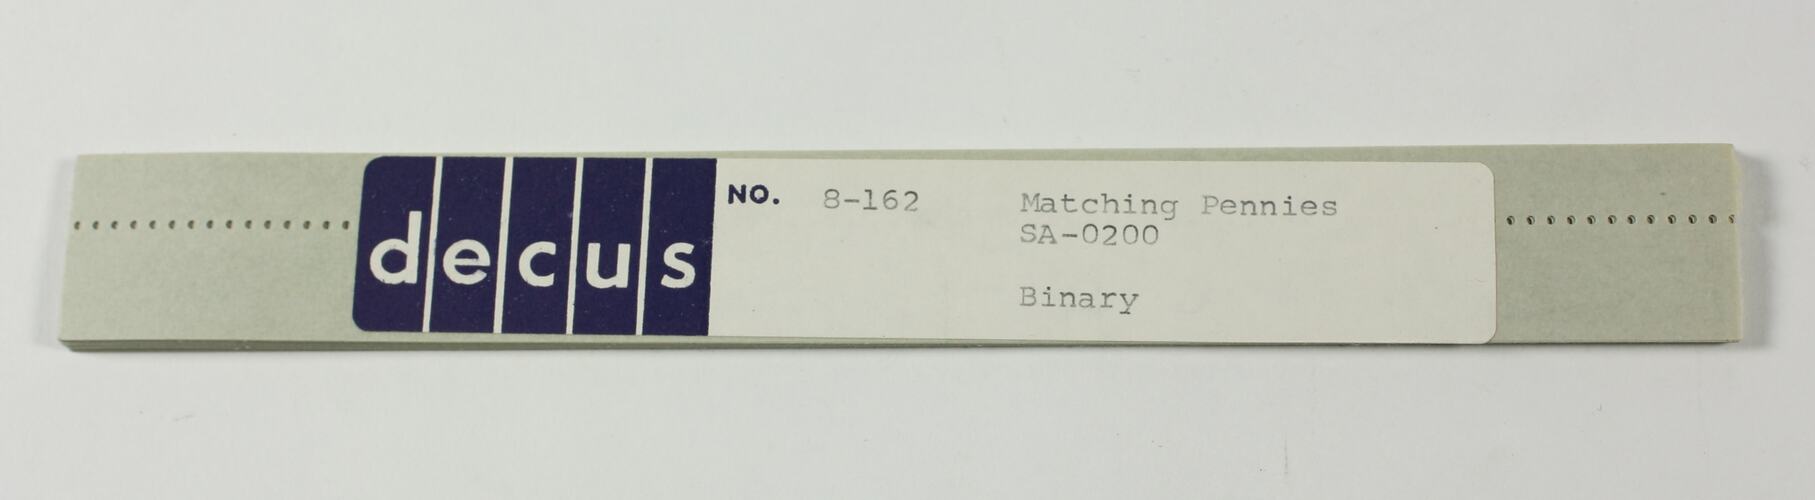 Paper Tape - DECUS, '8-162 Matching Pennies, SA-0200, Binary'